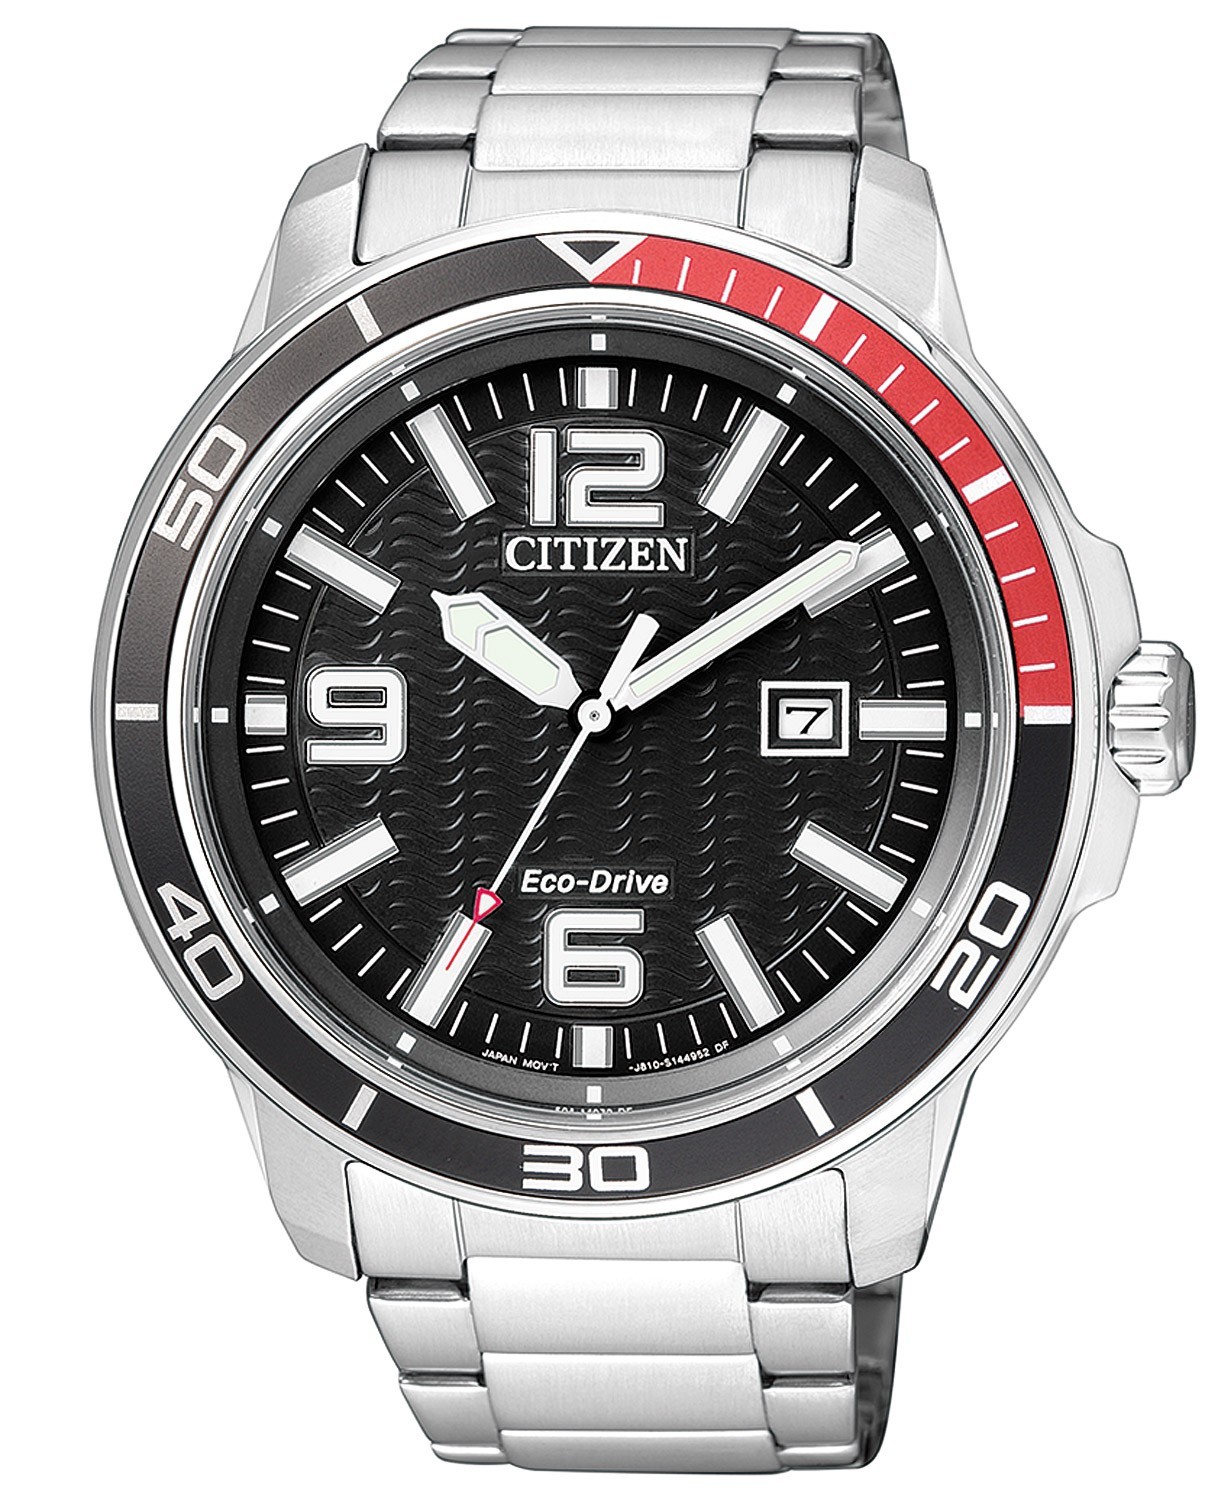 Японские наручные часы citizen. Часы Citizen Eco-Drive. Aw1520-51l. Часы Citizen ca0718-13e. Часы Citizen Eco-Drive мужские.